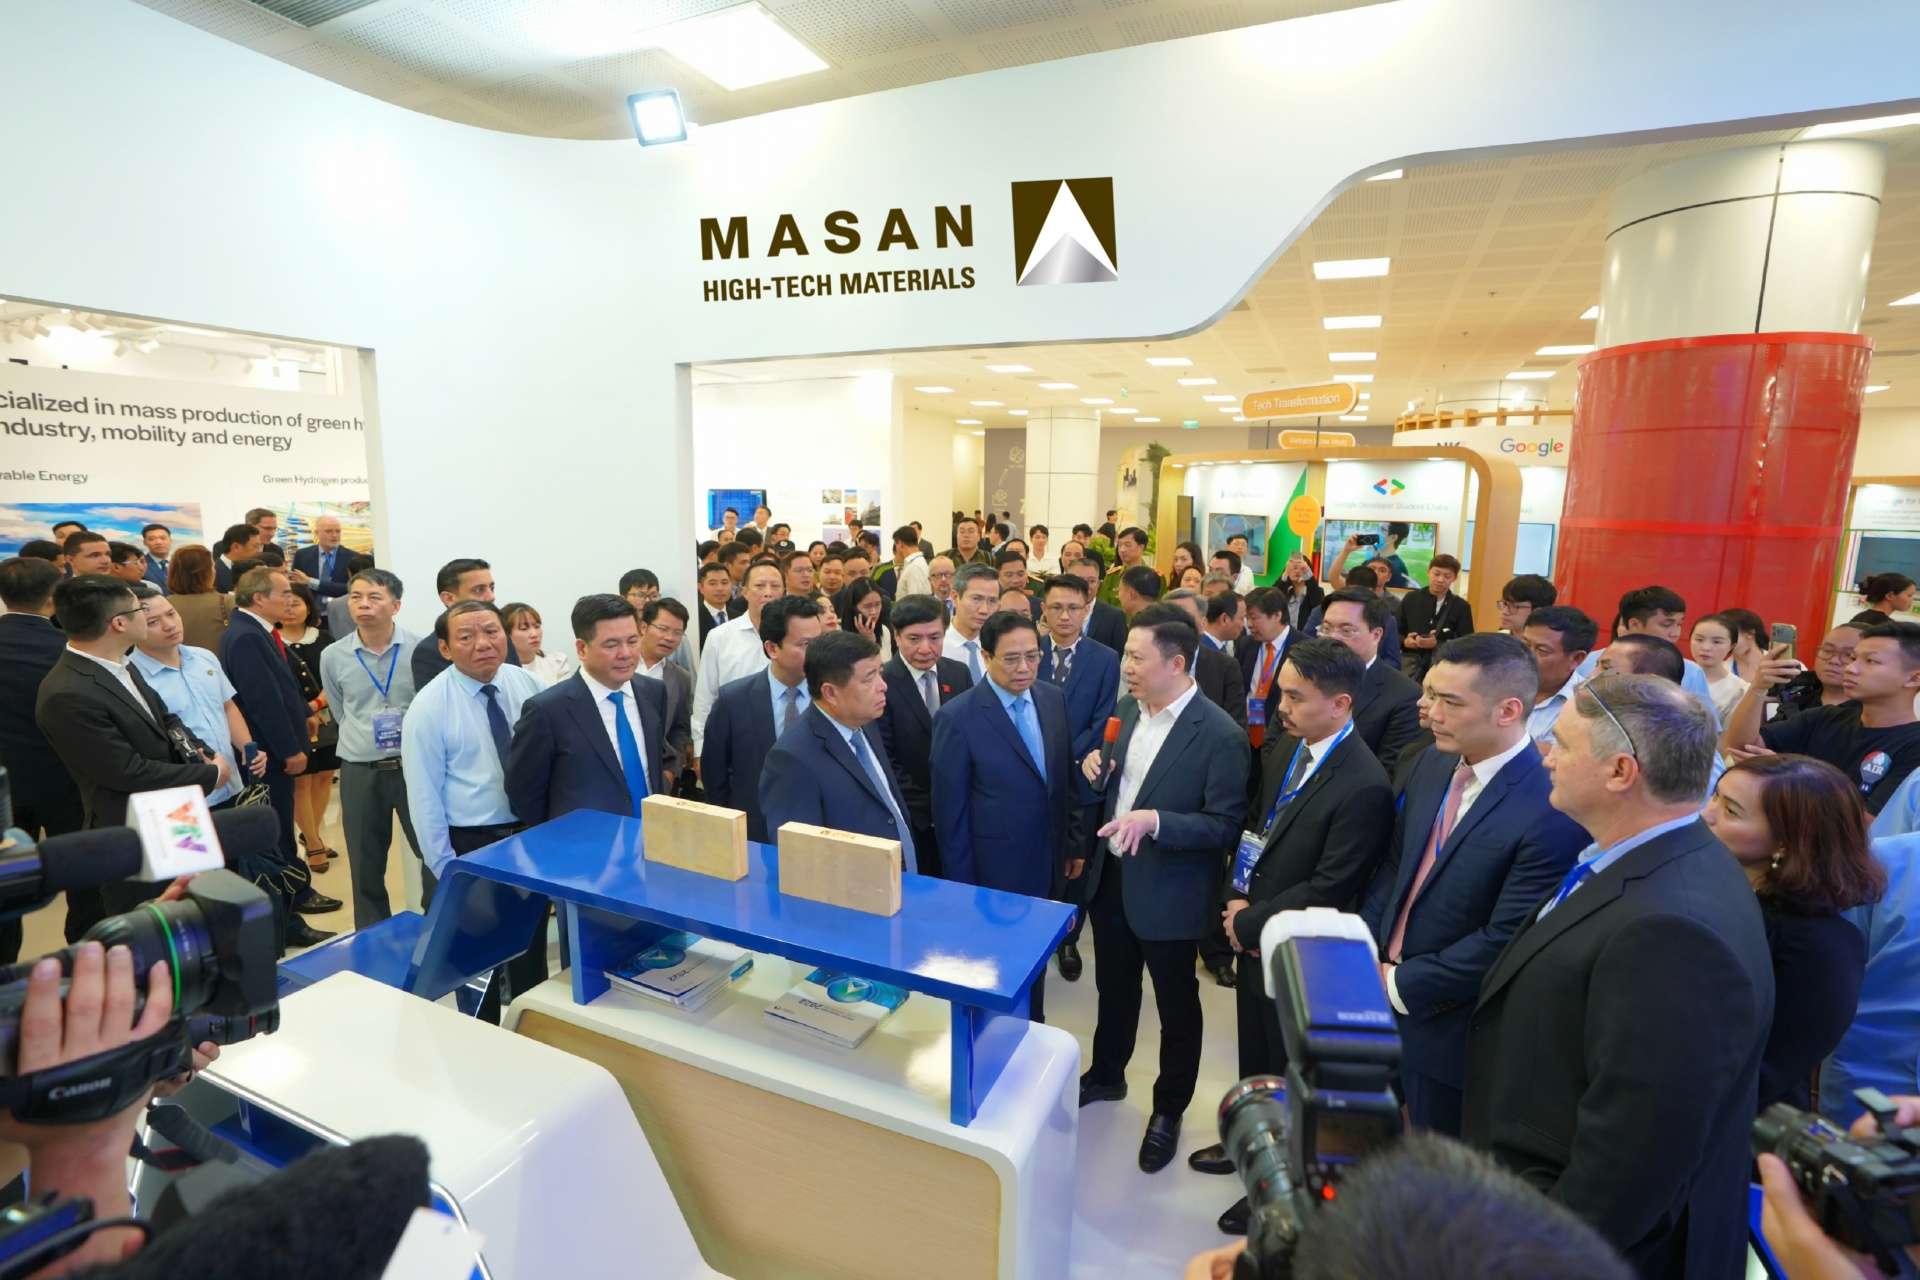 Masan High-Tech Materials' booth at Vietnam International Innovation Exhibition